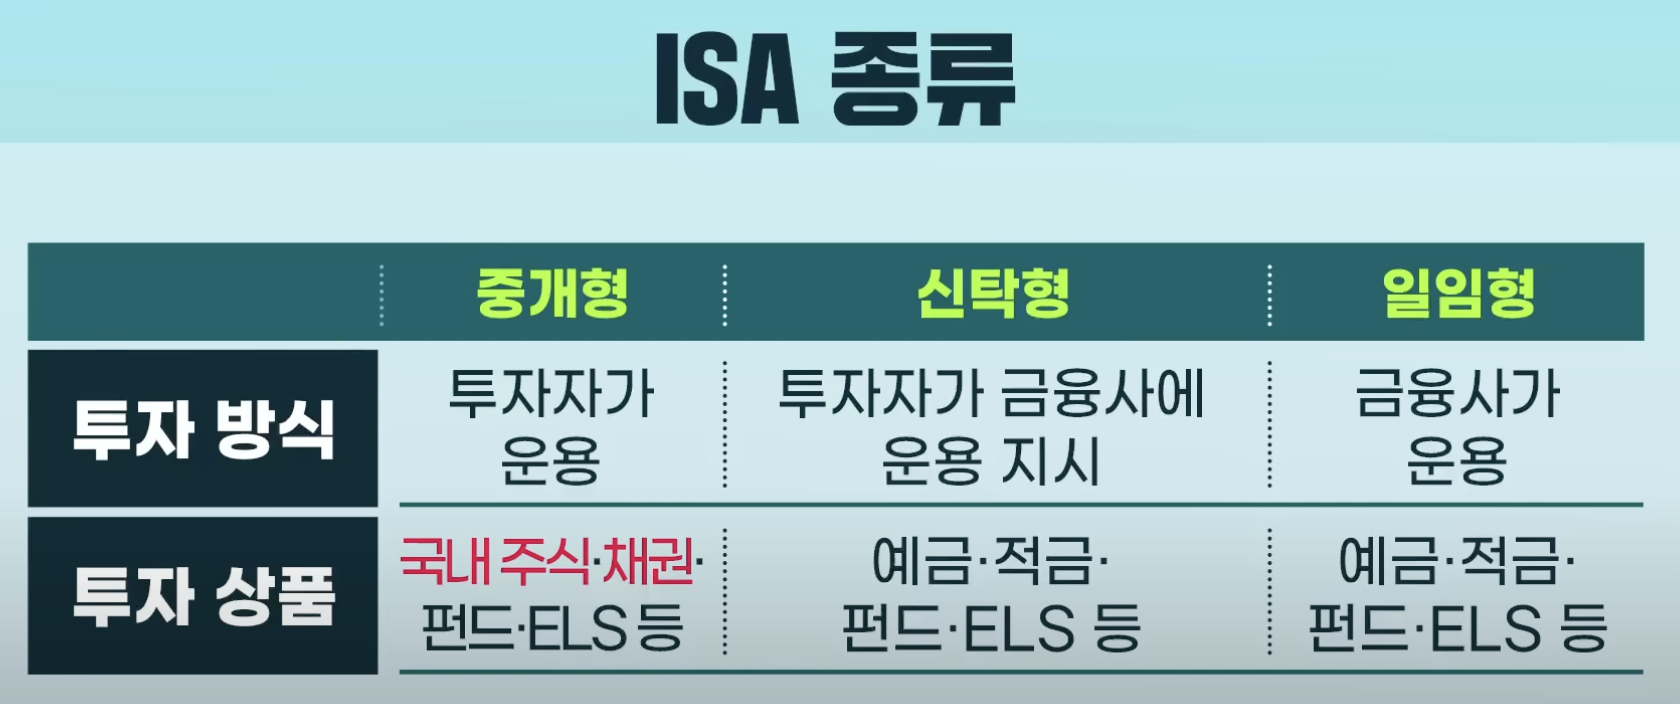 ISA의 종류